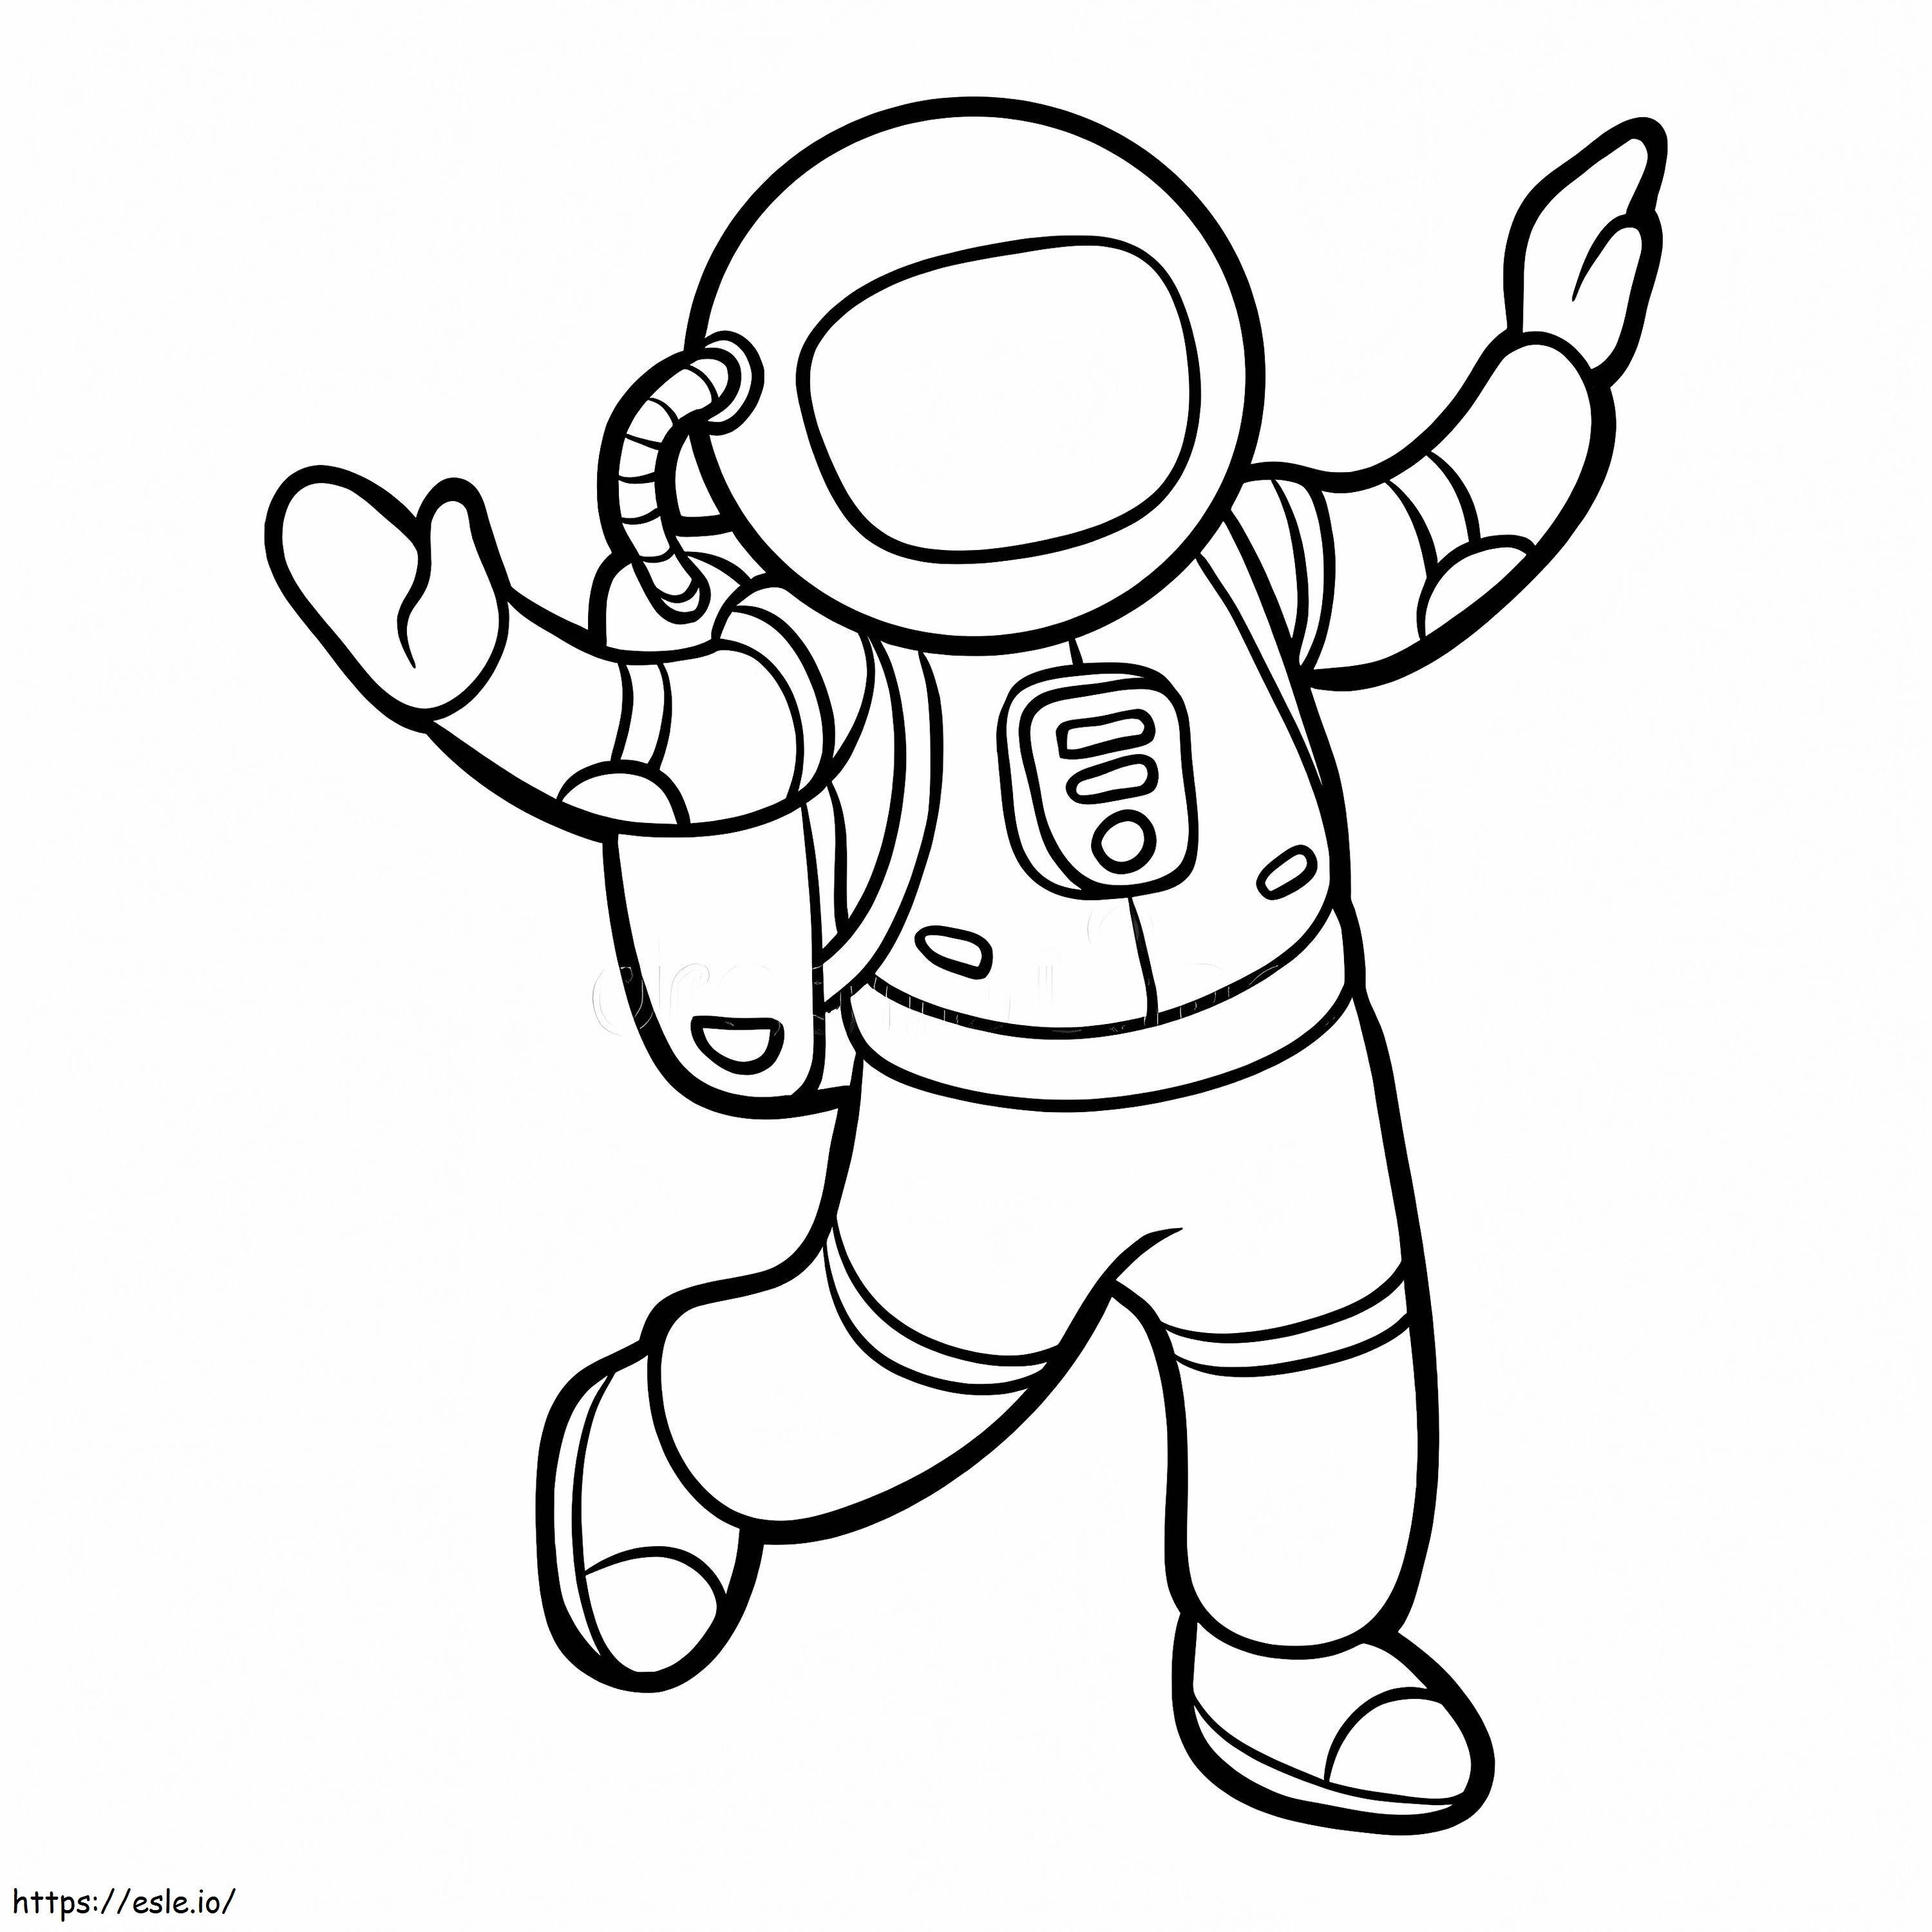 Coloriage Astronaute incroyable à imprimer dessin